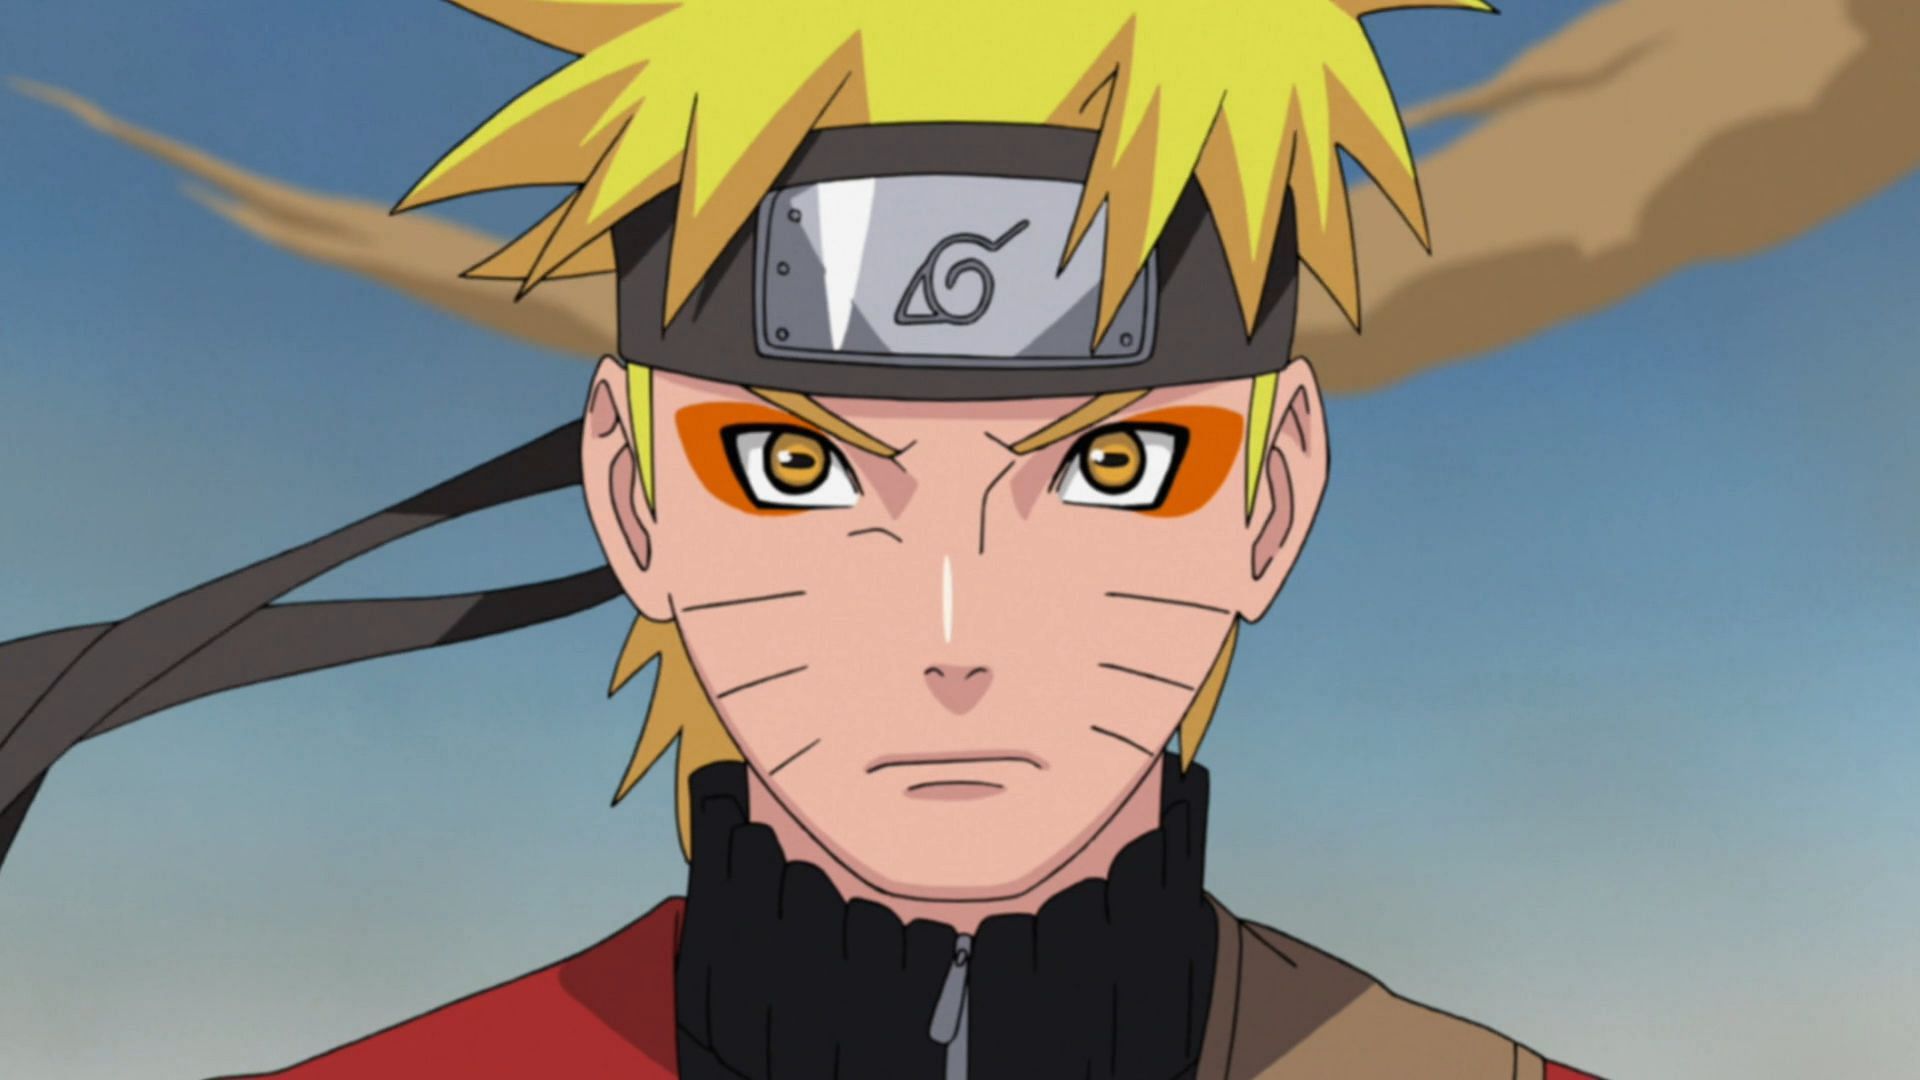 Naruto as seen in the Naruto: Shippuden anime (Image via Studio Pierrot)